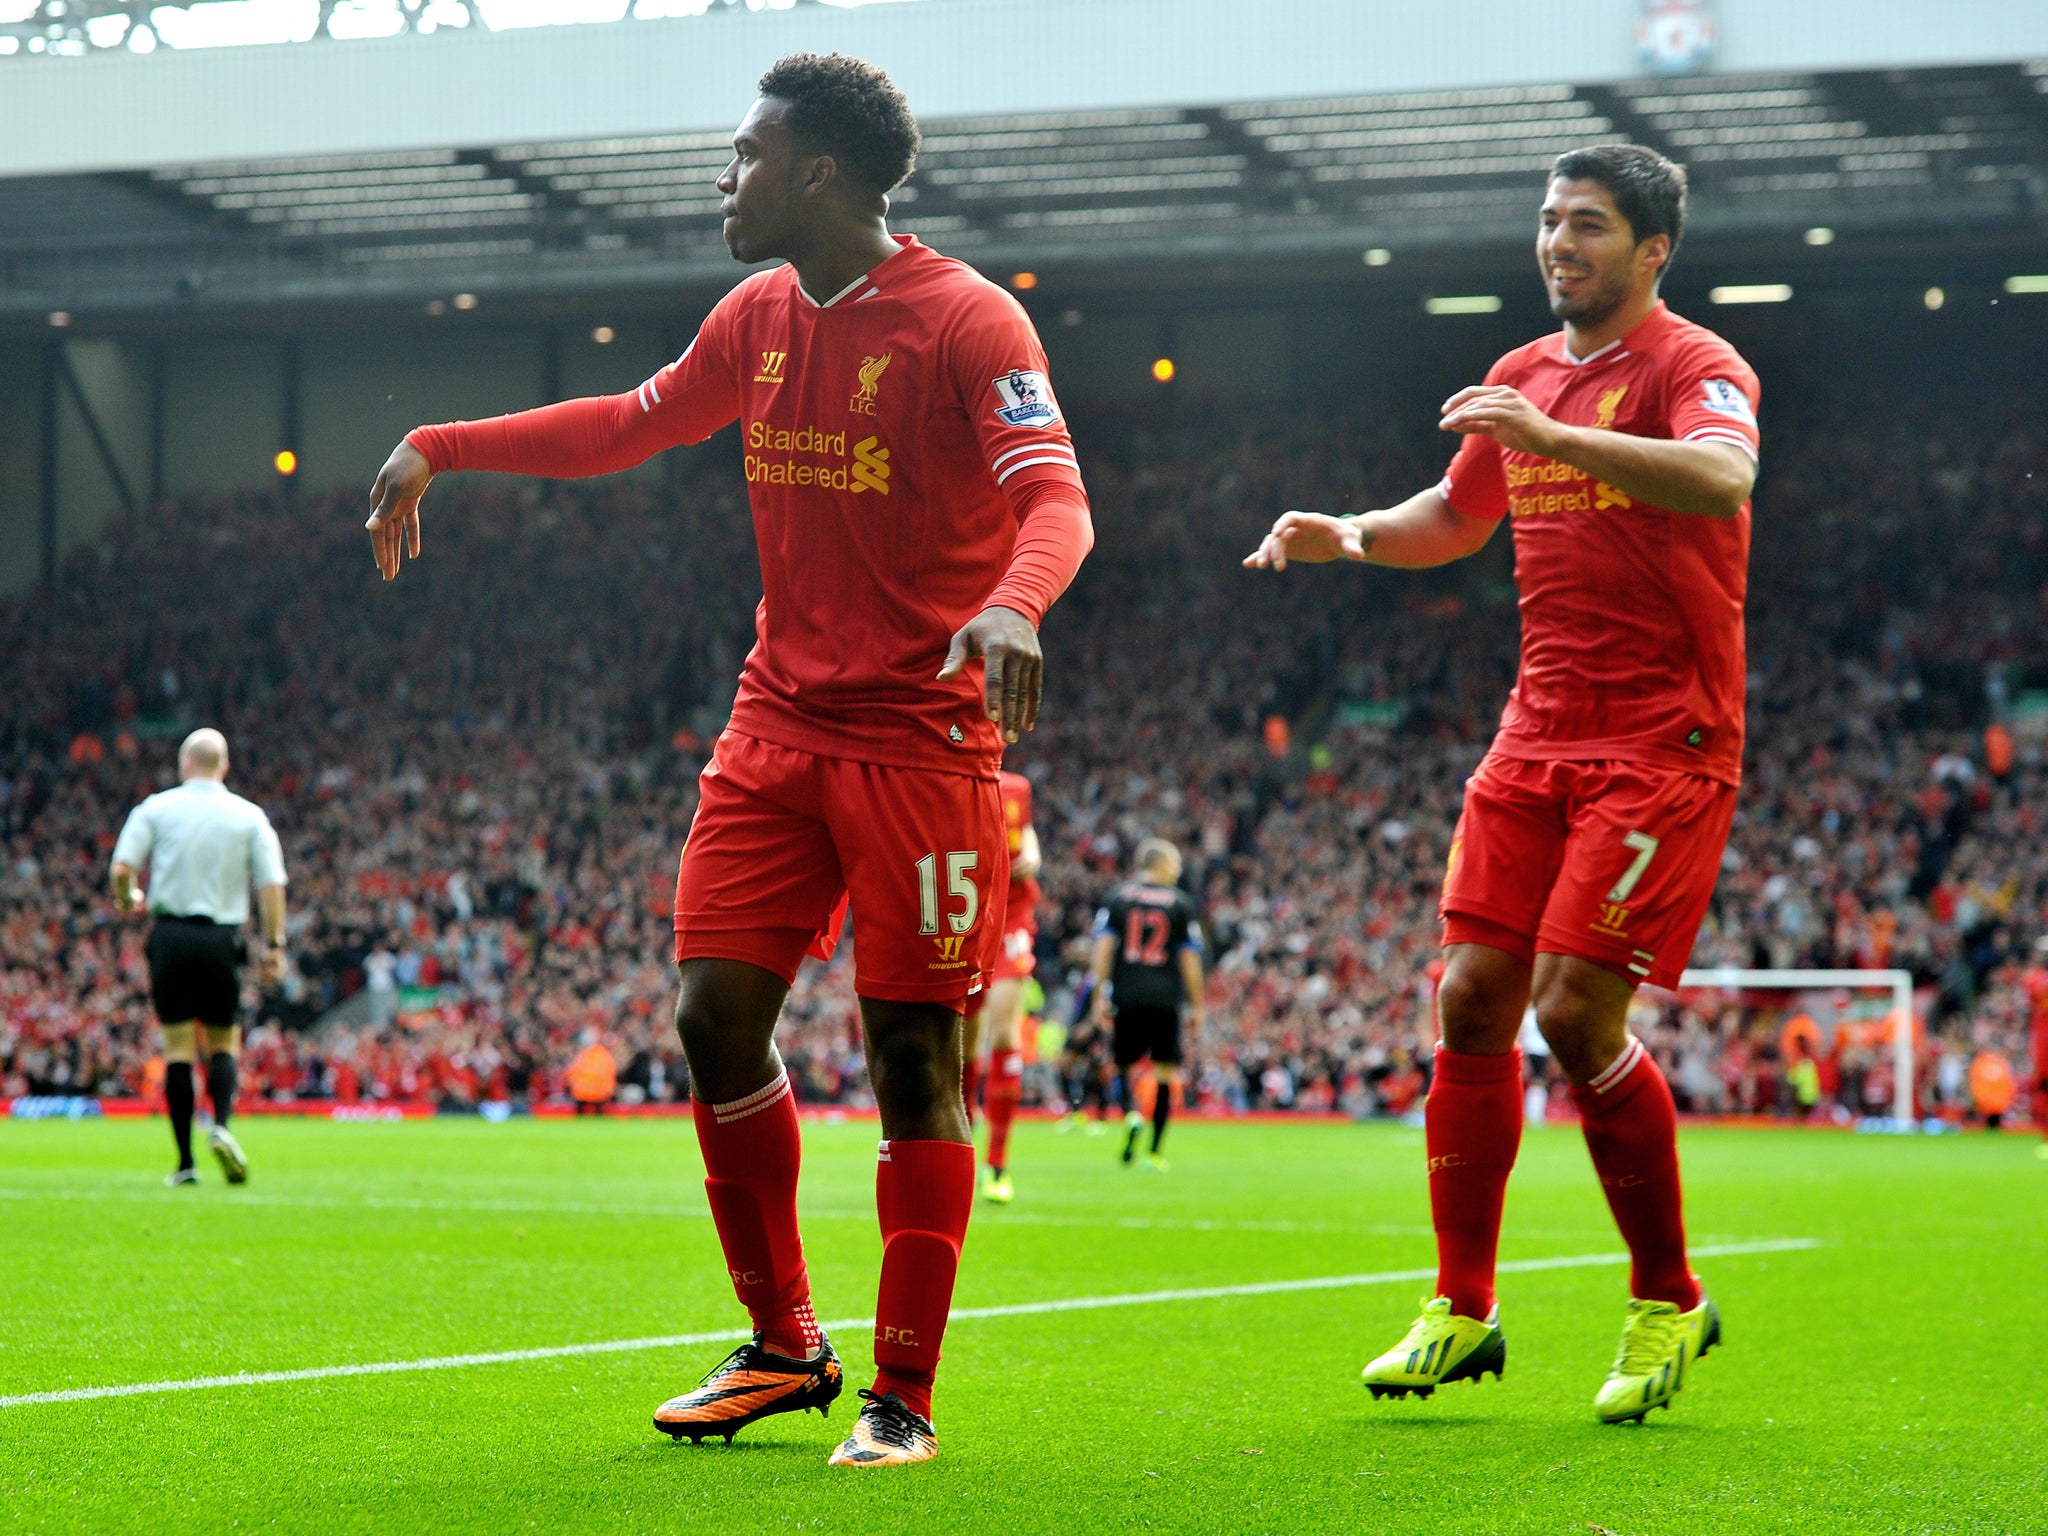 Daniel Sturridge and Luis Suarez celebrate after Liverpool go 2-0 up against Crystal Palace